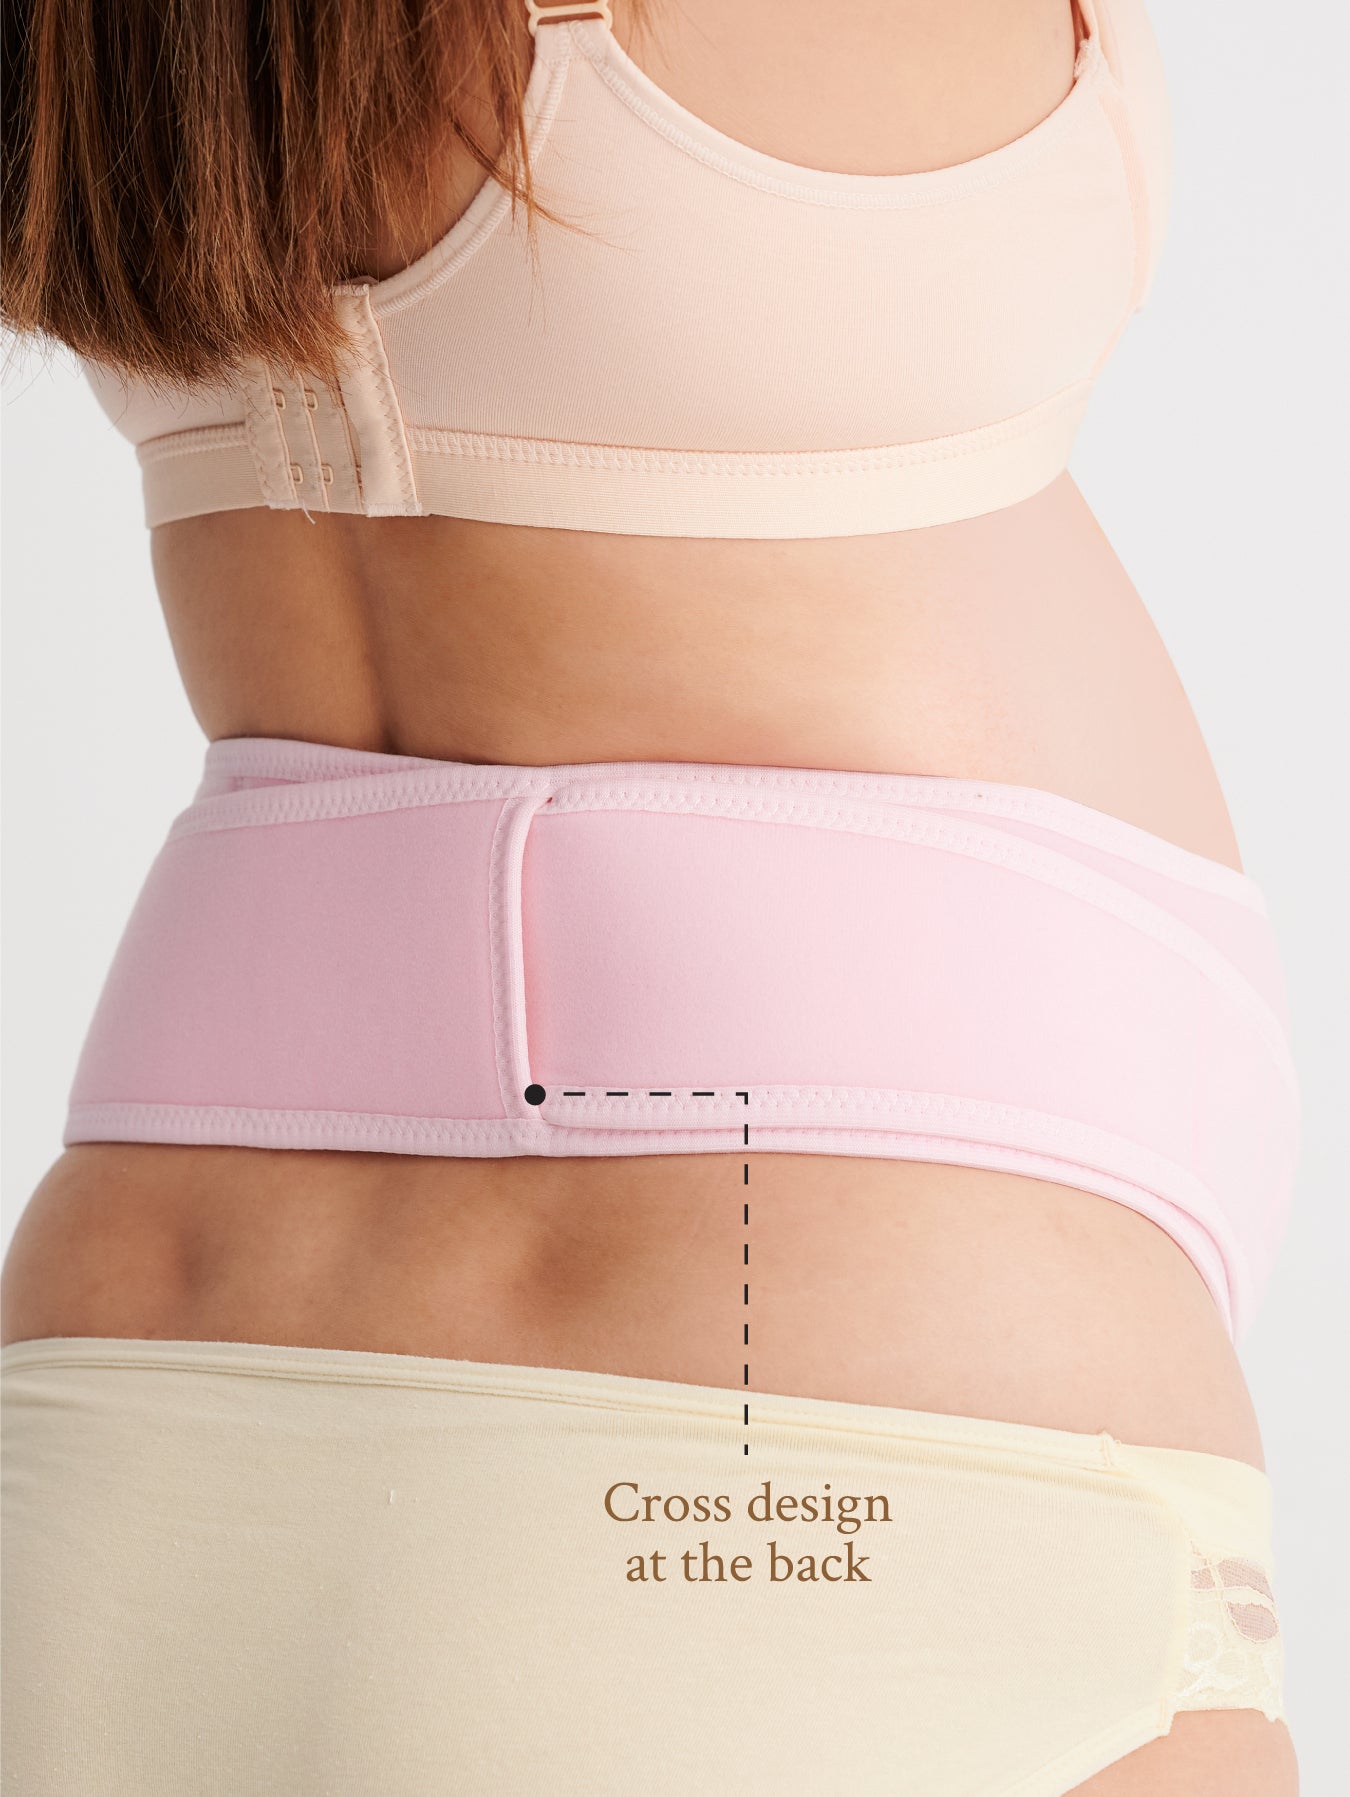 3D prenatal cradle support belt